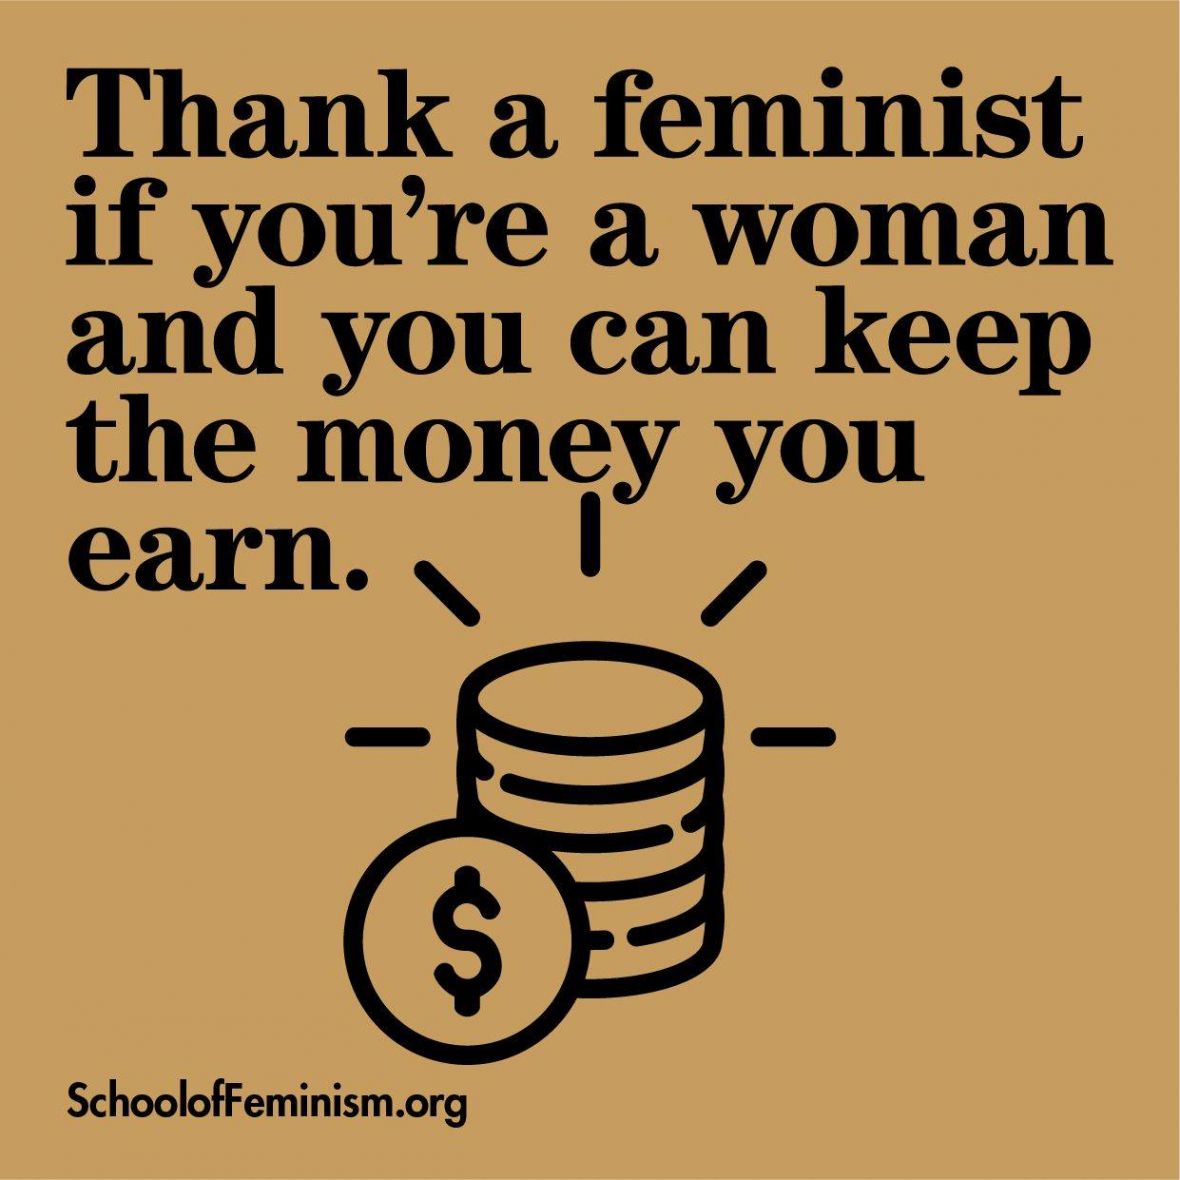 SchoolofFeminism.org - undefined